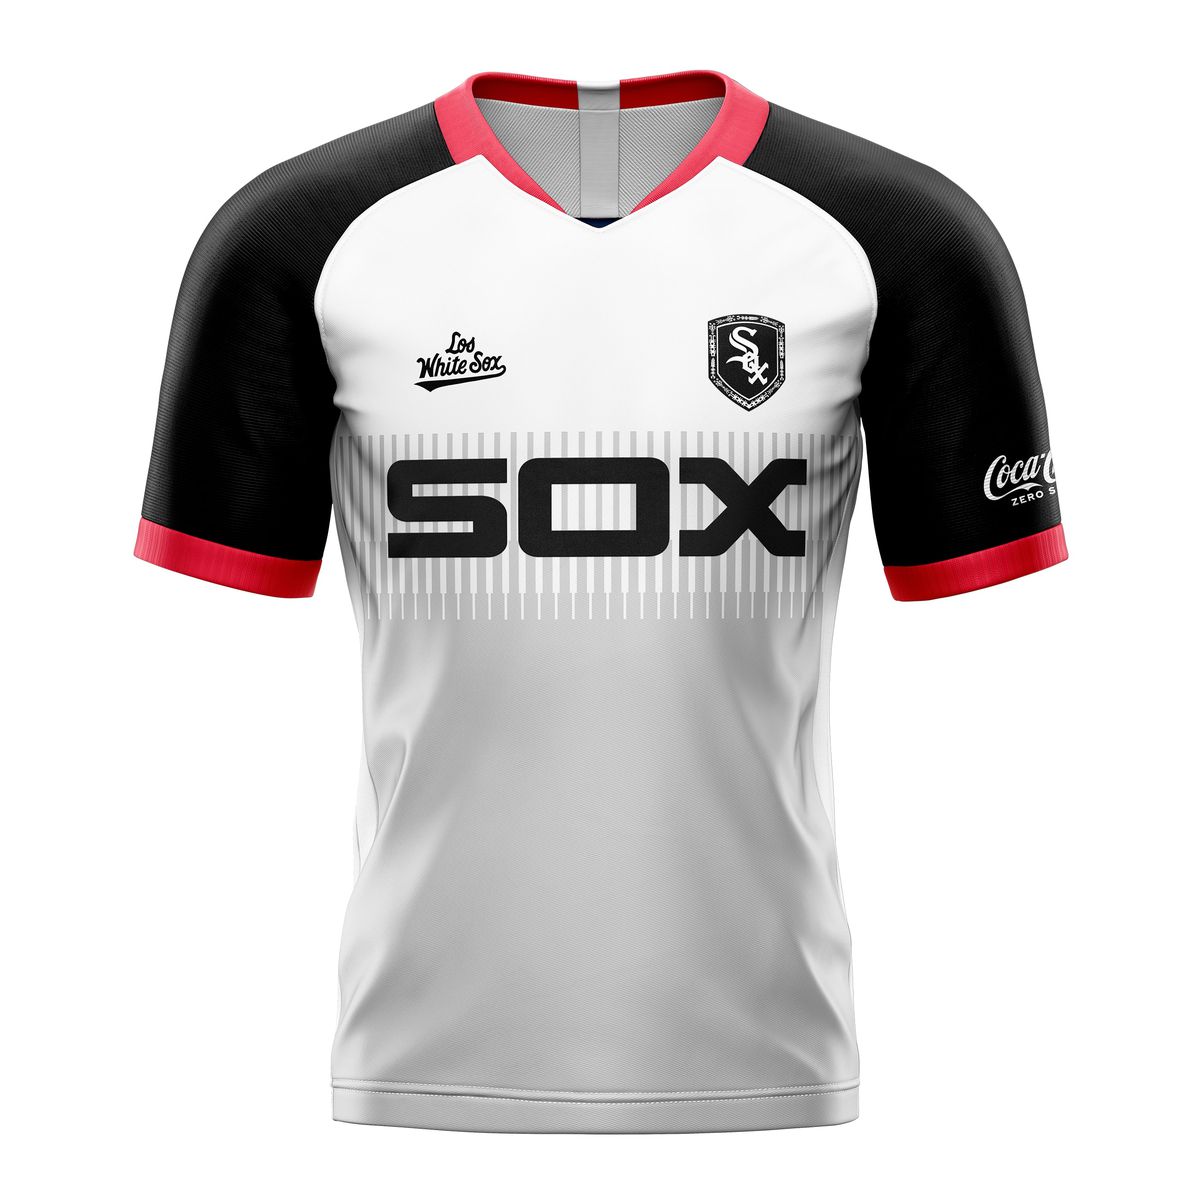 white sox soccer jersey 2022